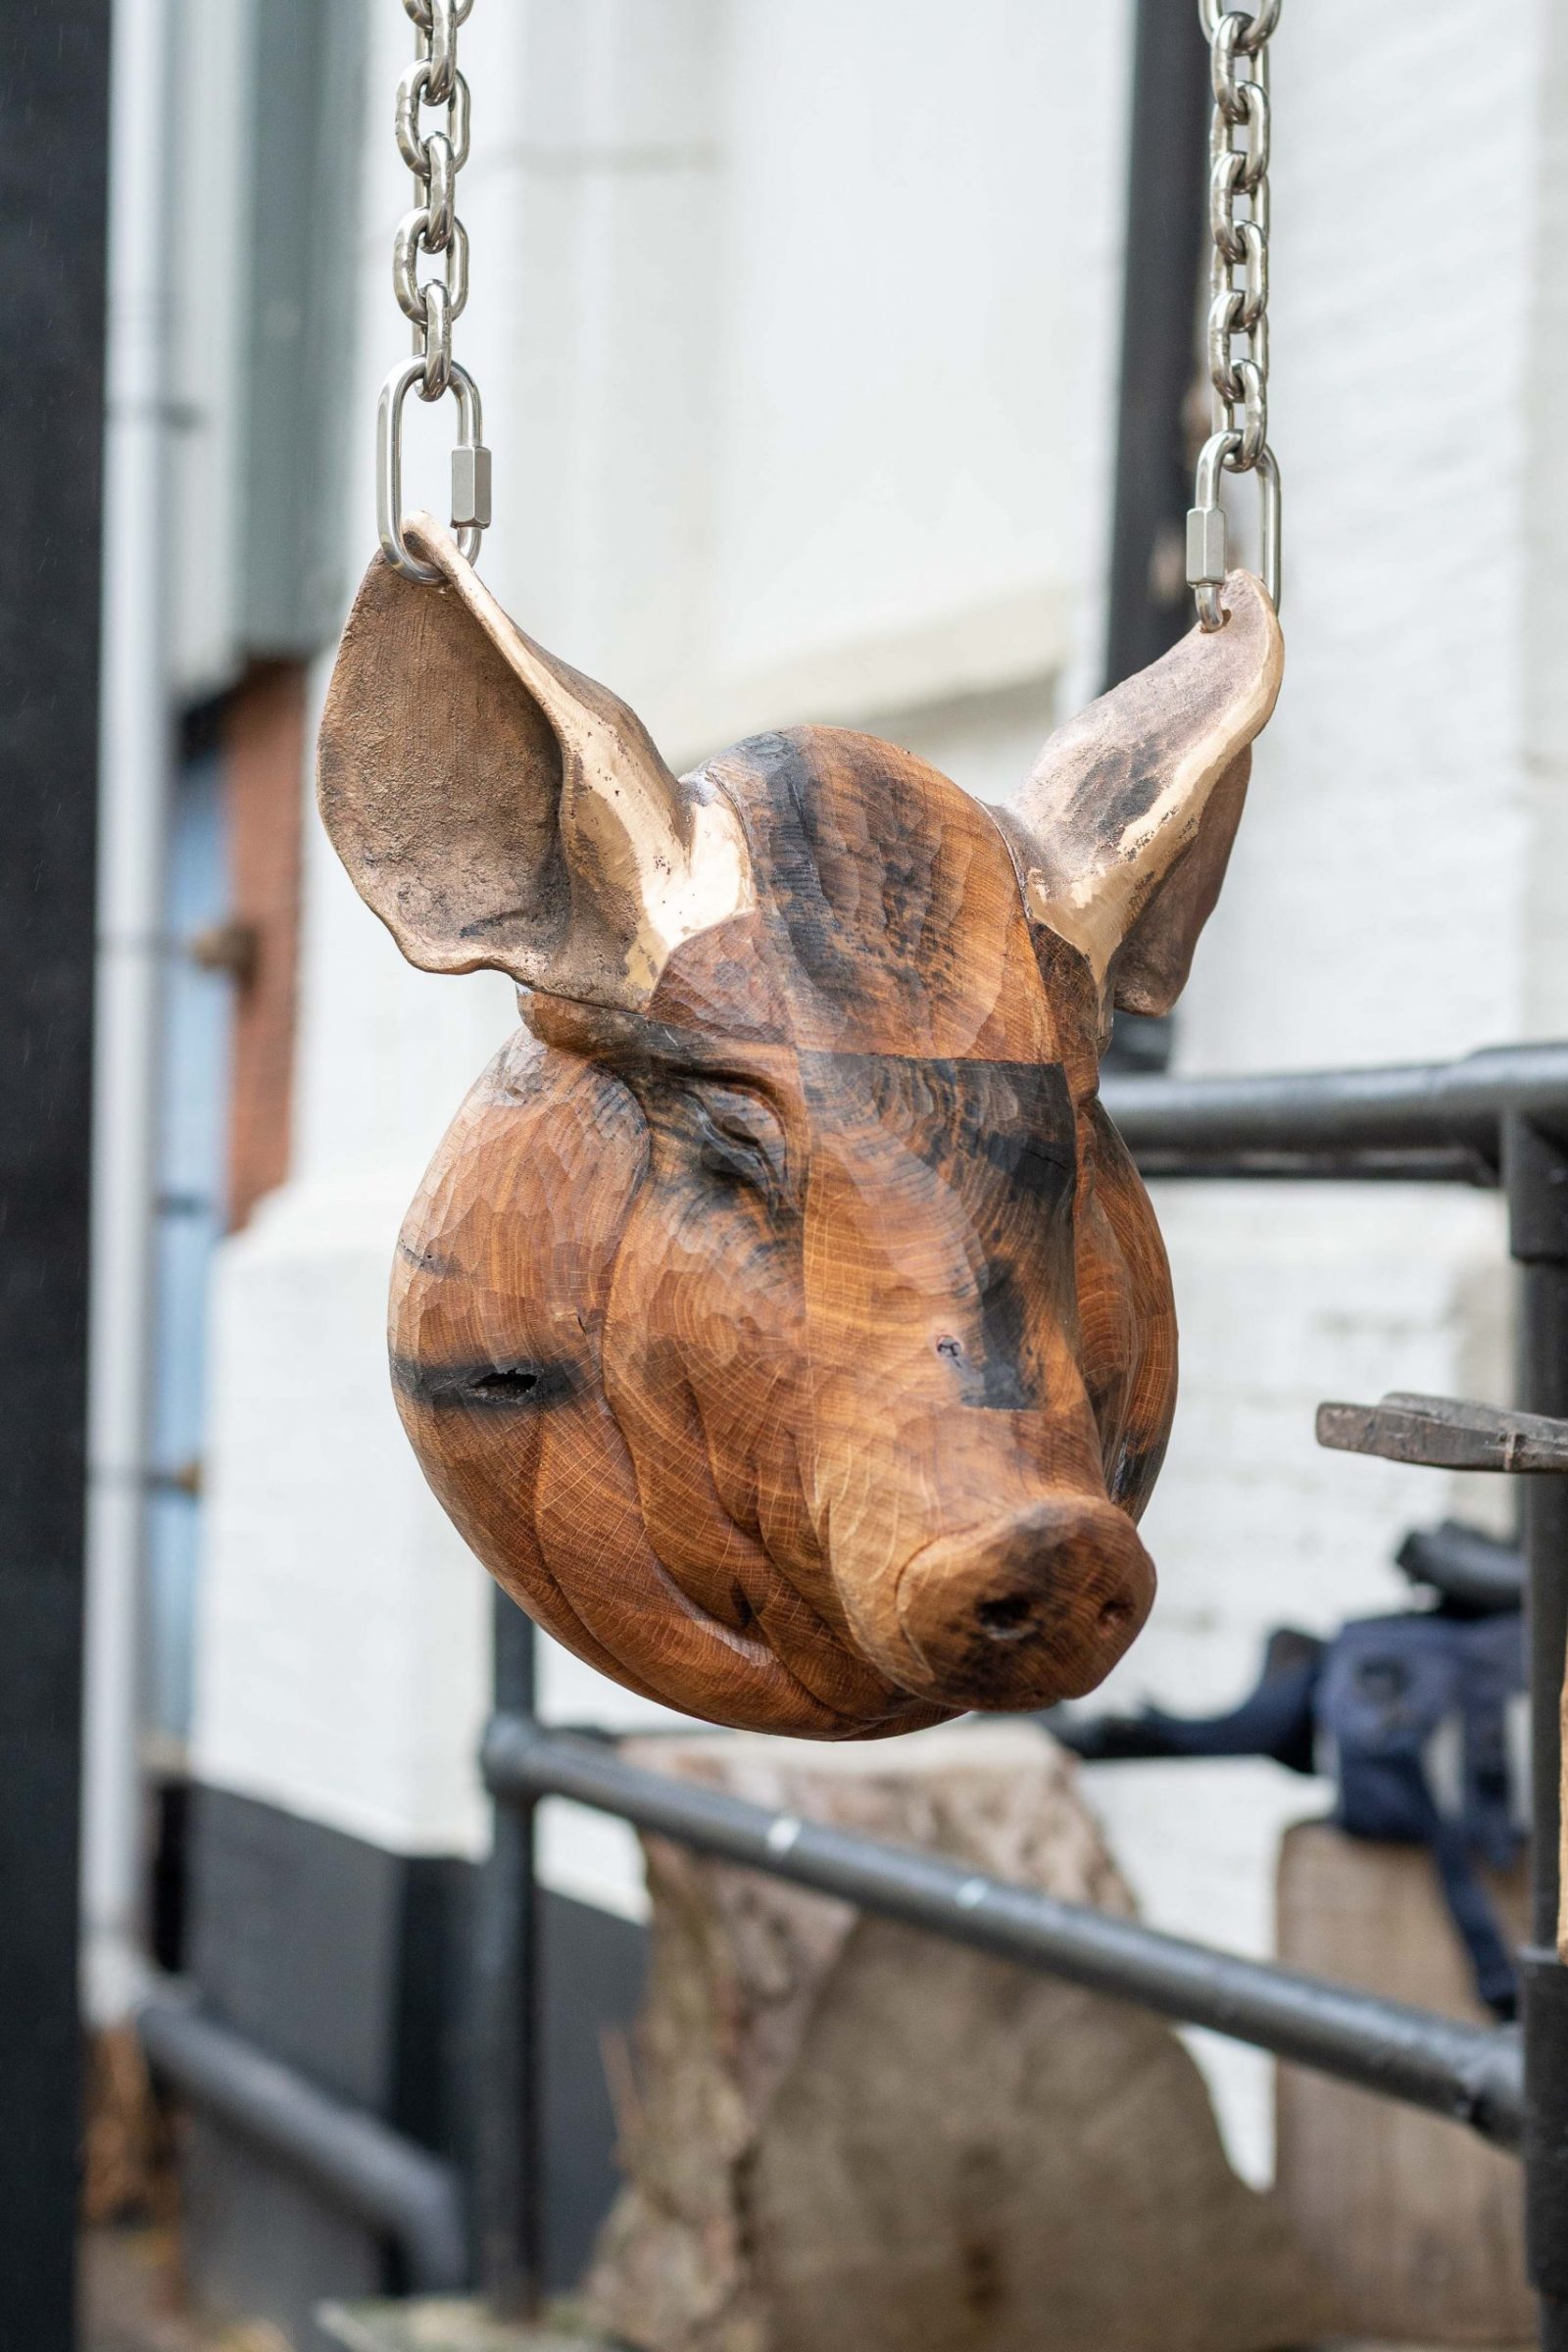 Jan Hendzel studio mantec pigs head sculpture-7-scaled